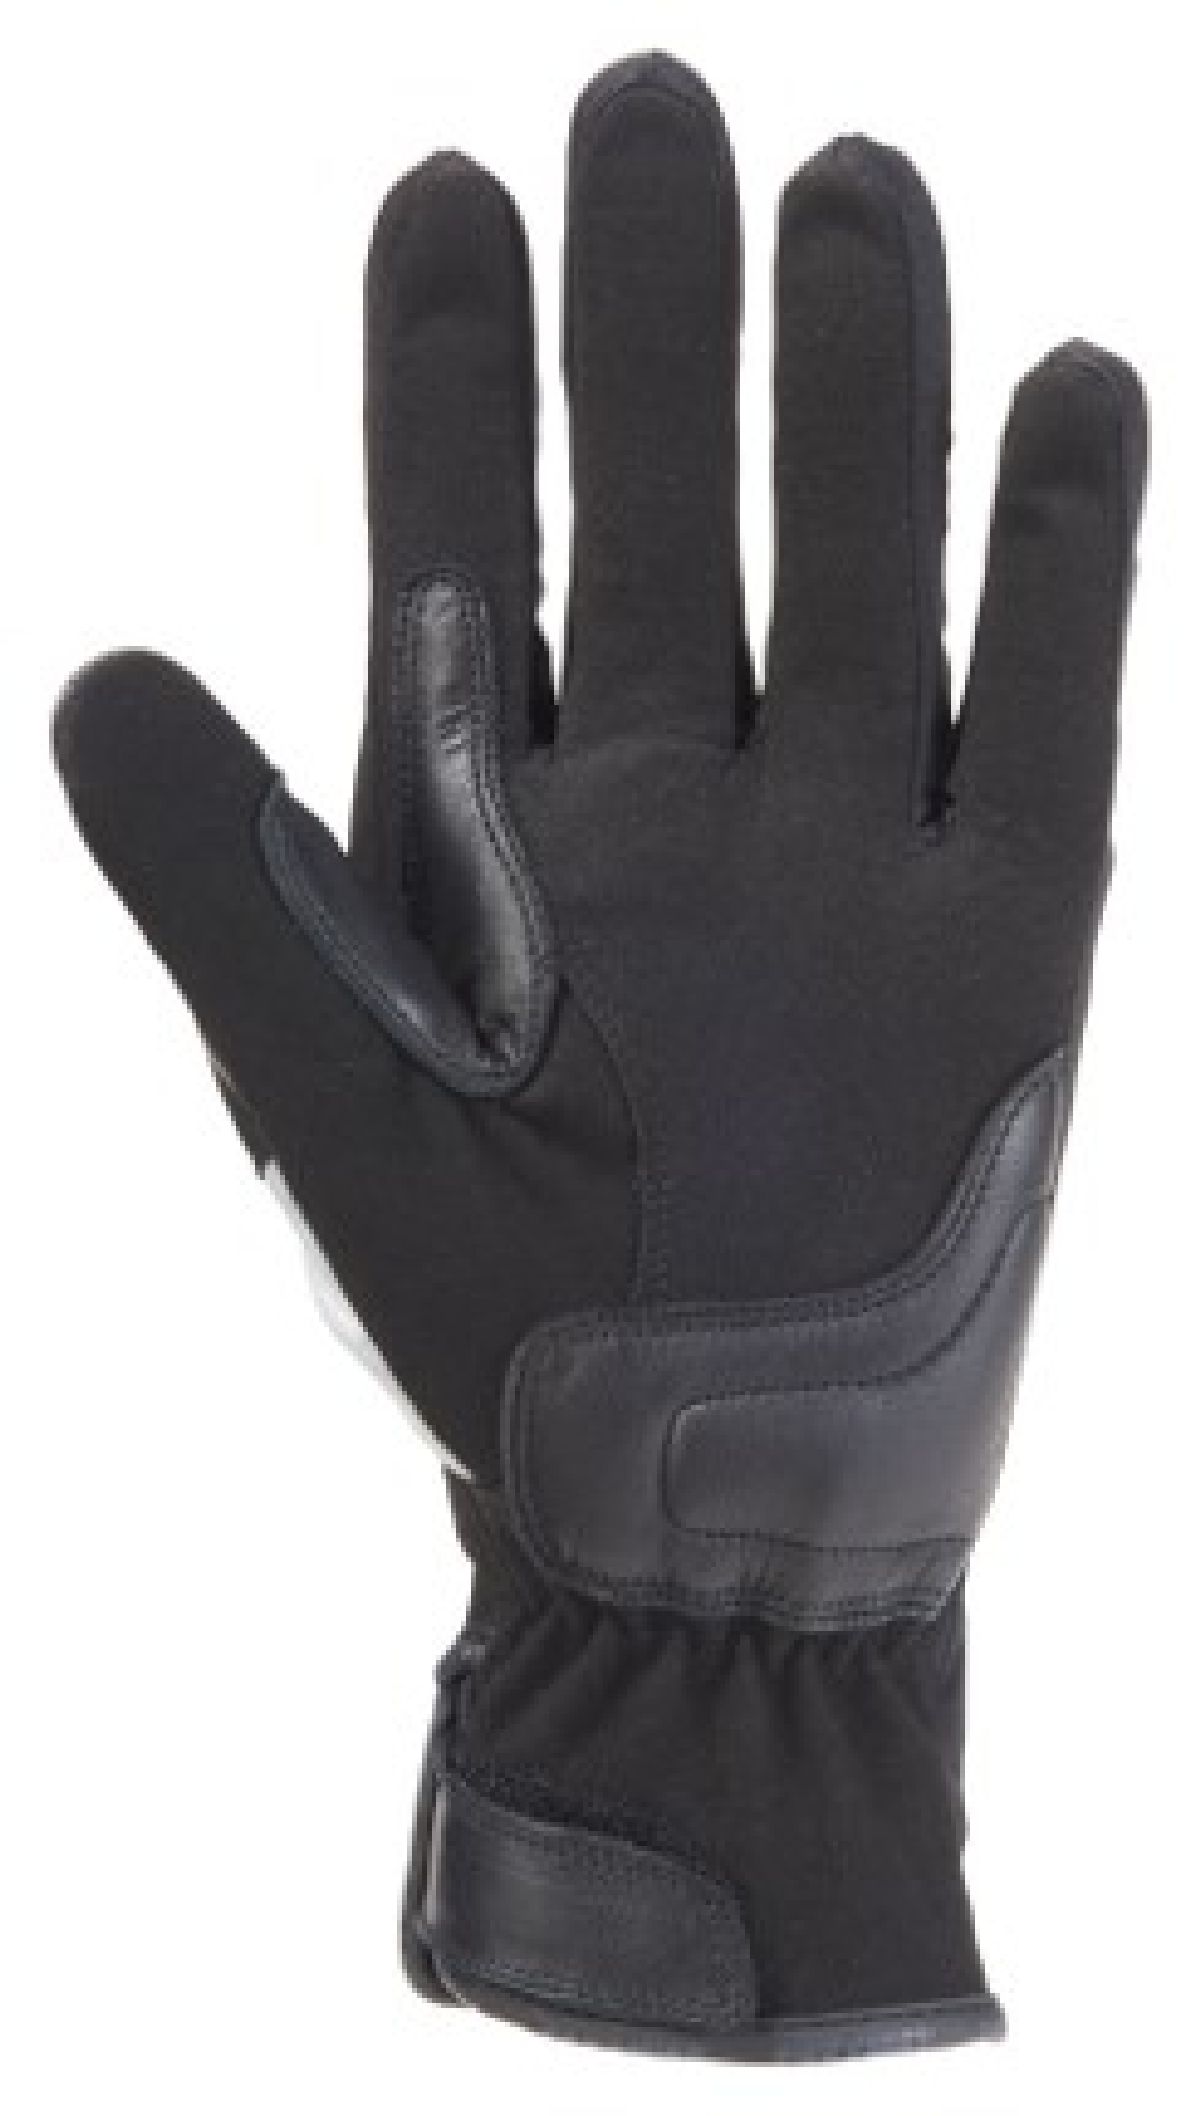 Easy II gants Noir/Gris L